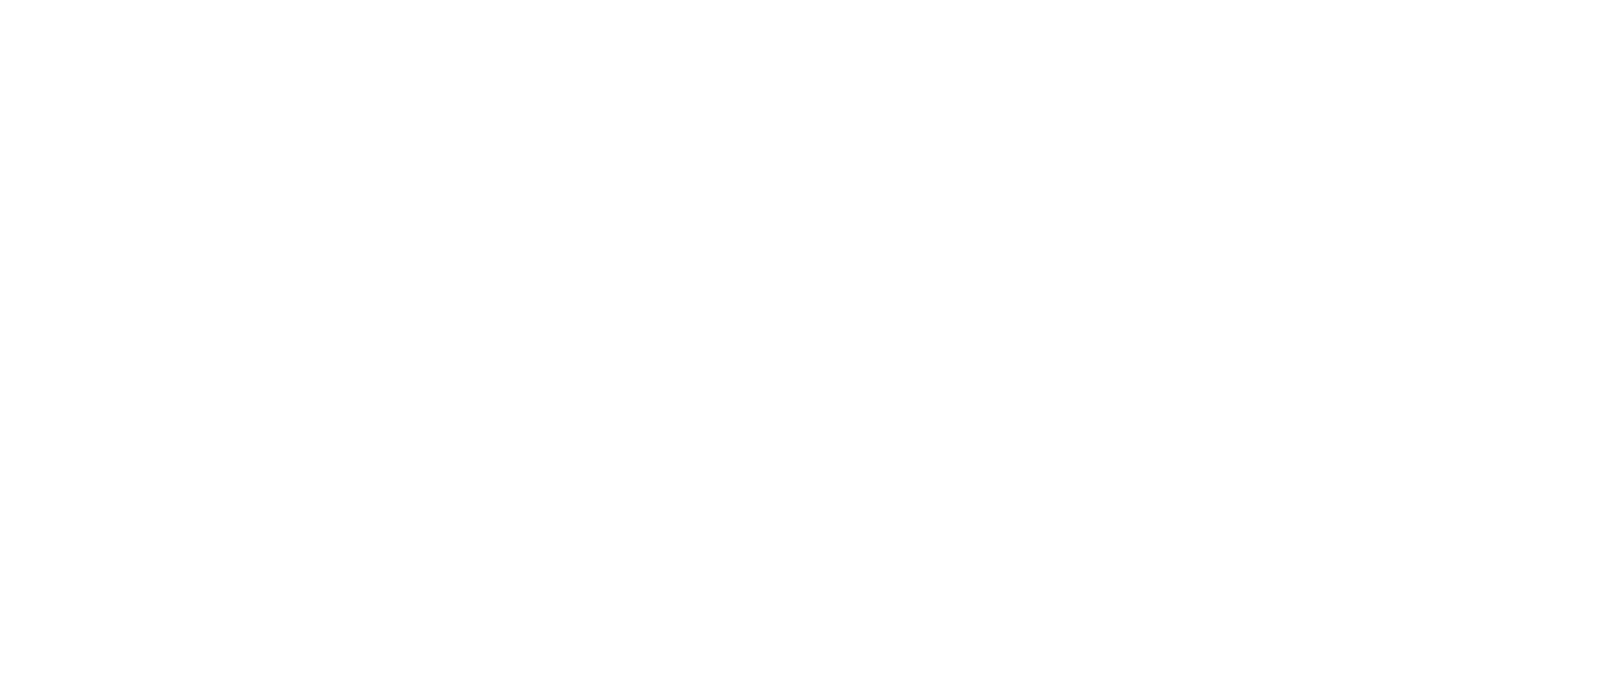 CapitaLand Ascott Trust logo large for dark backgrounds (transparent PNG)